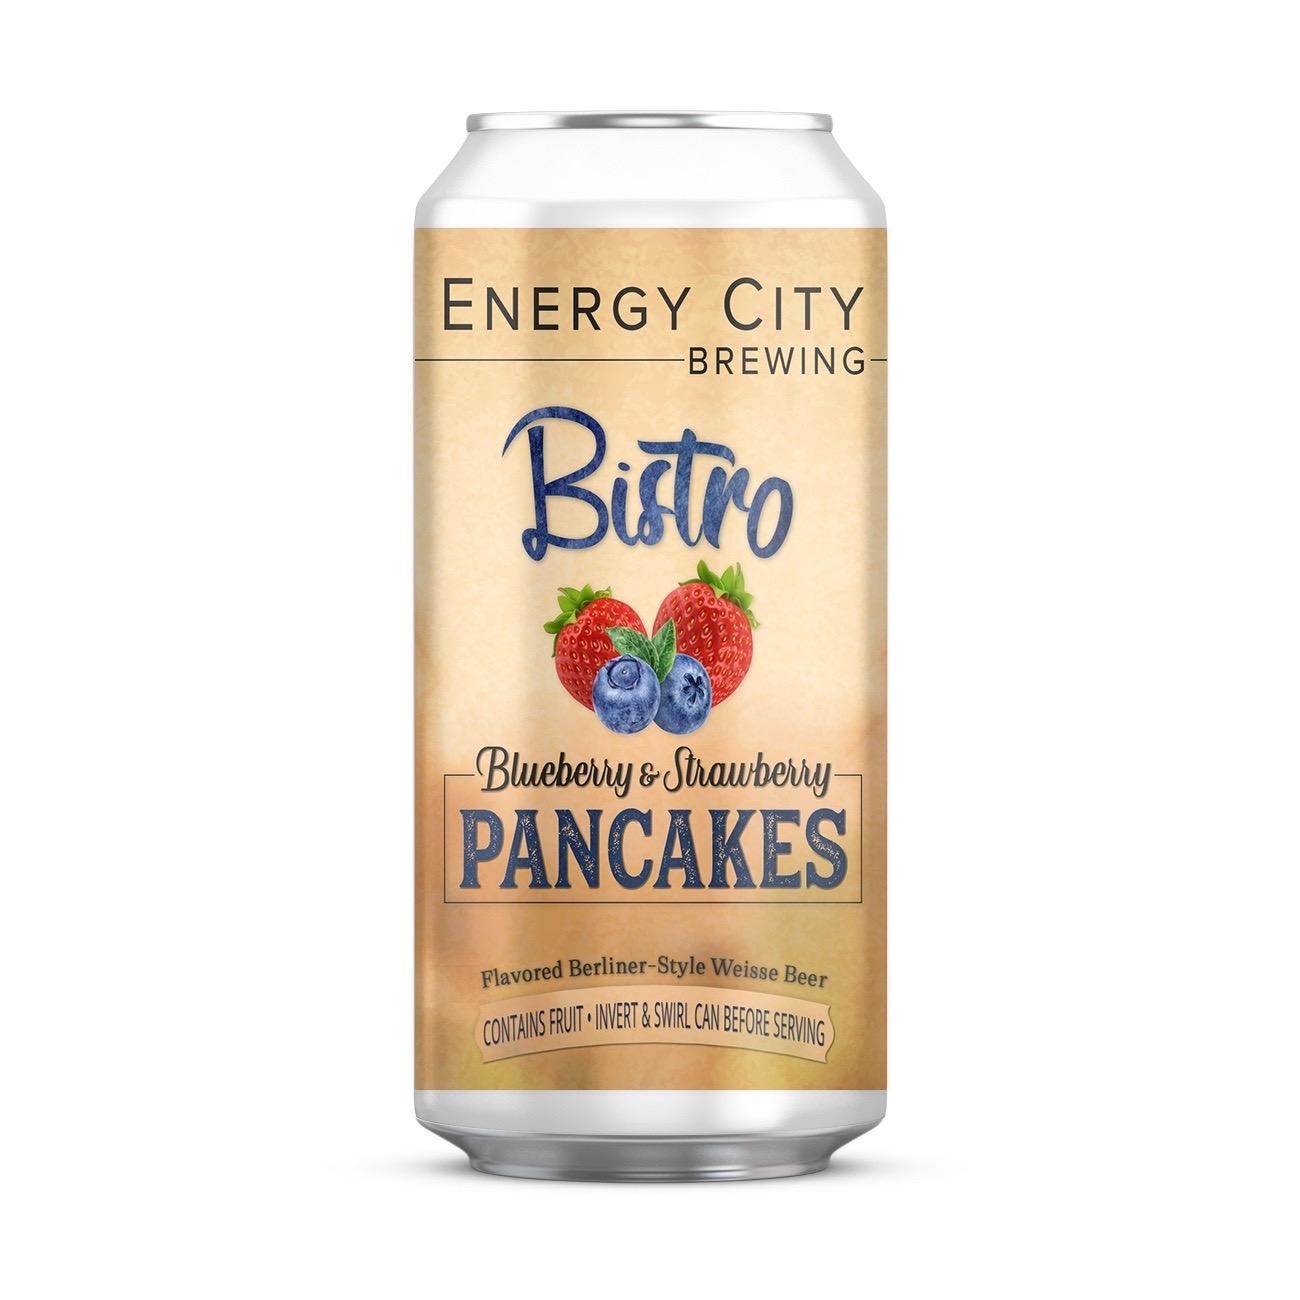 Energy City - Bistro: Blueberry & Strawberry Pancakes